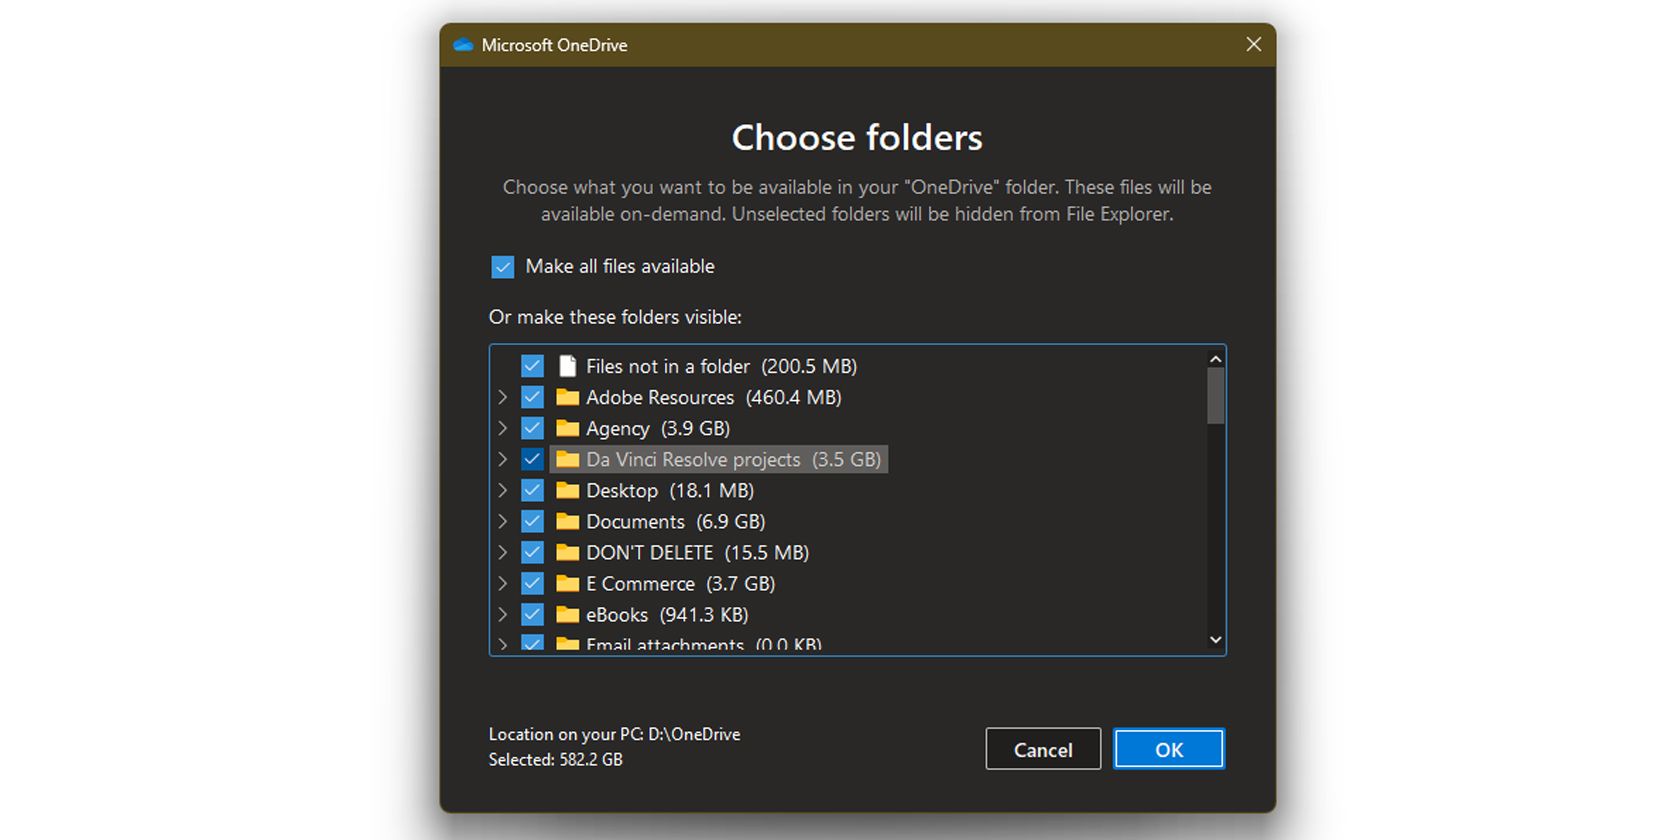 Choose Folders Window for Microsoft OneDrive